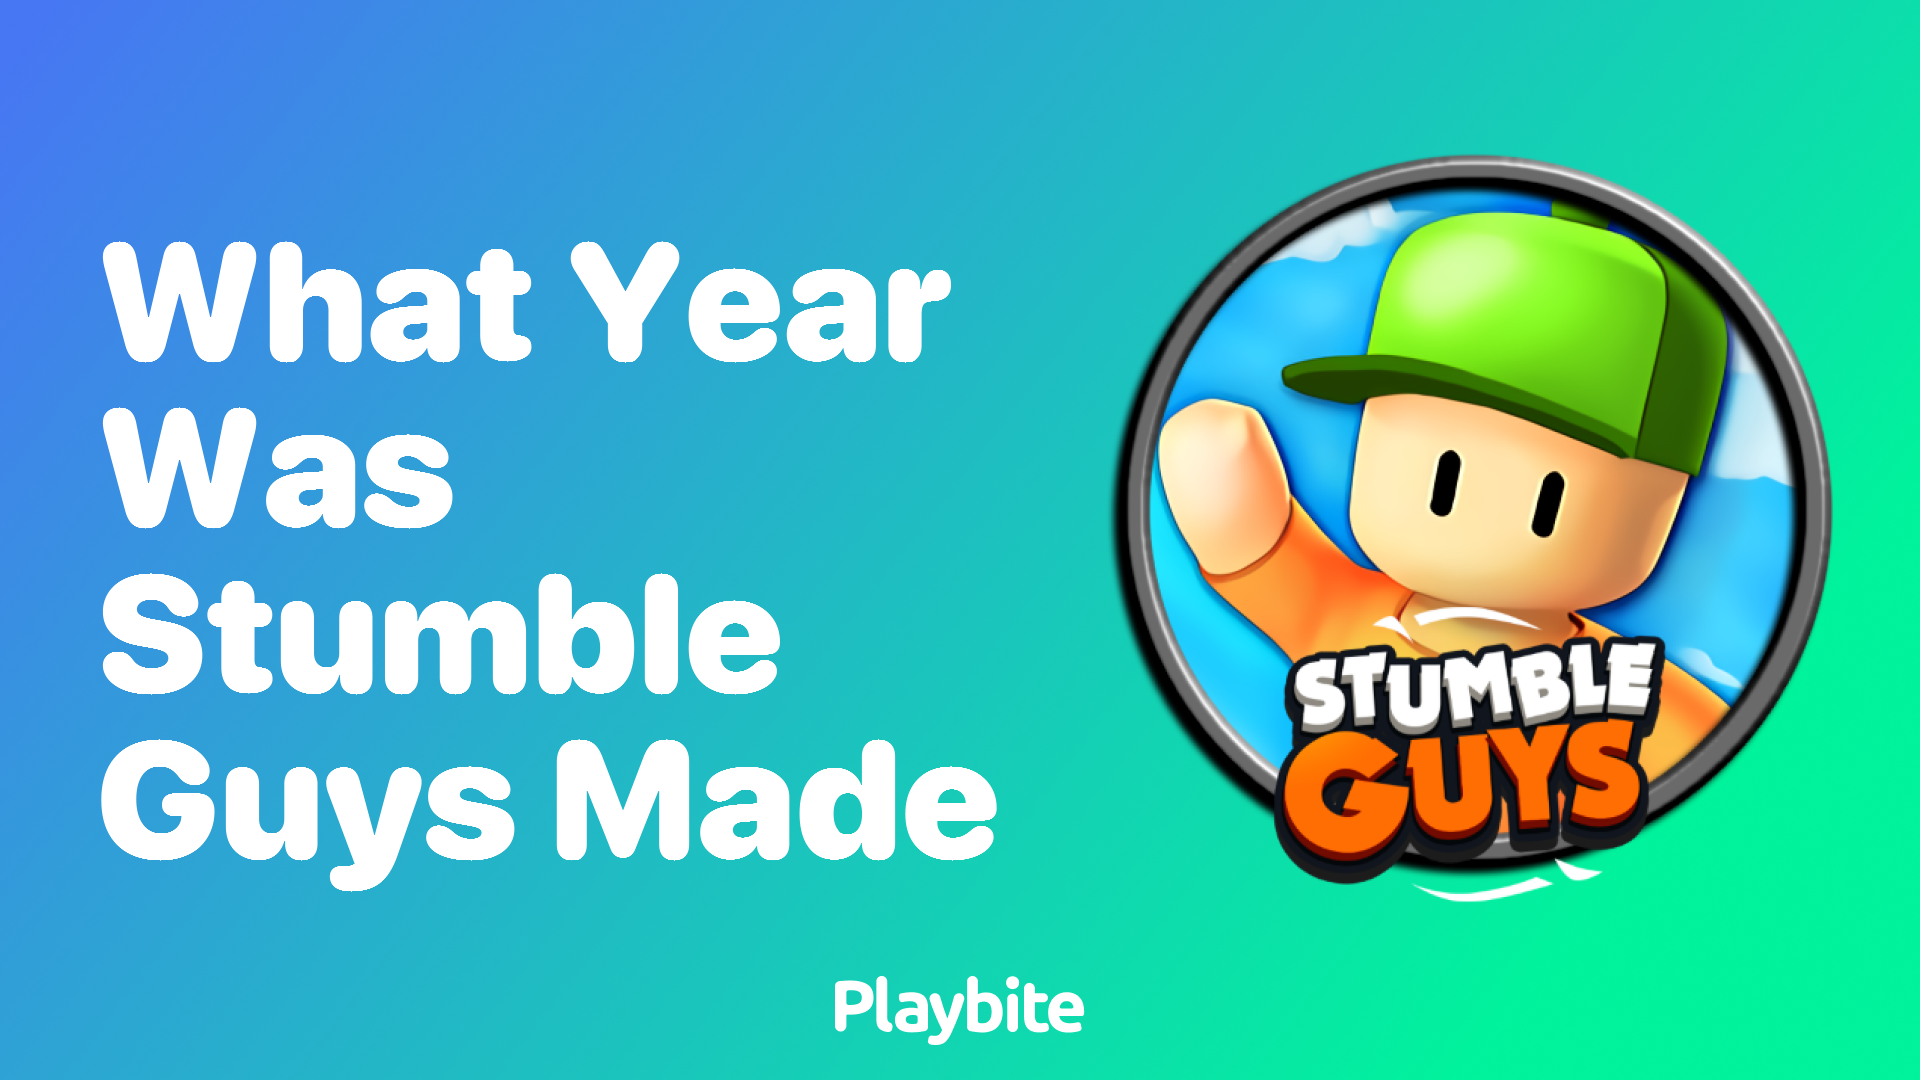 What Year Was Stumble Guys Made?